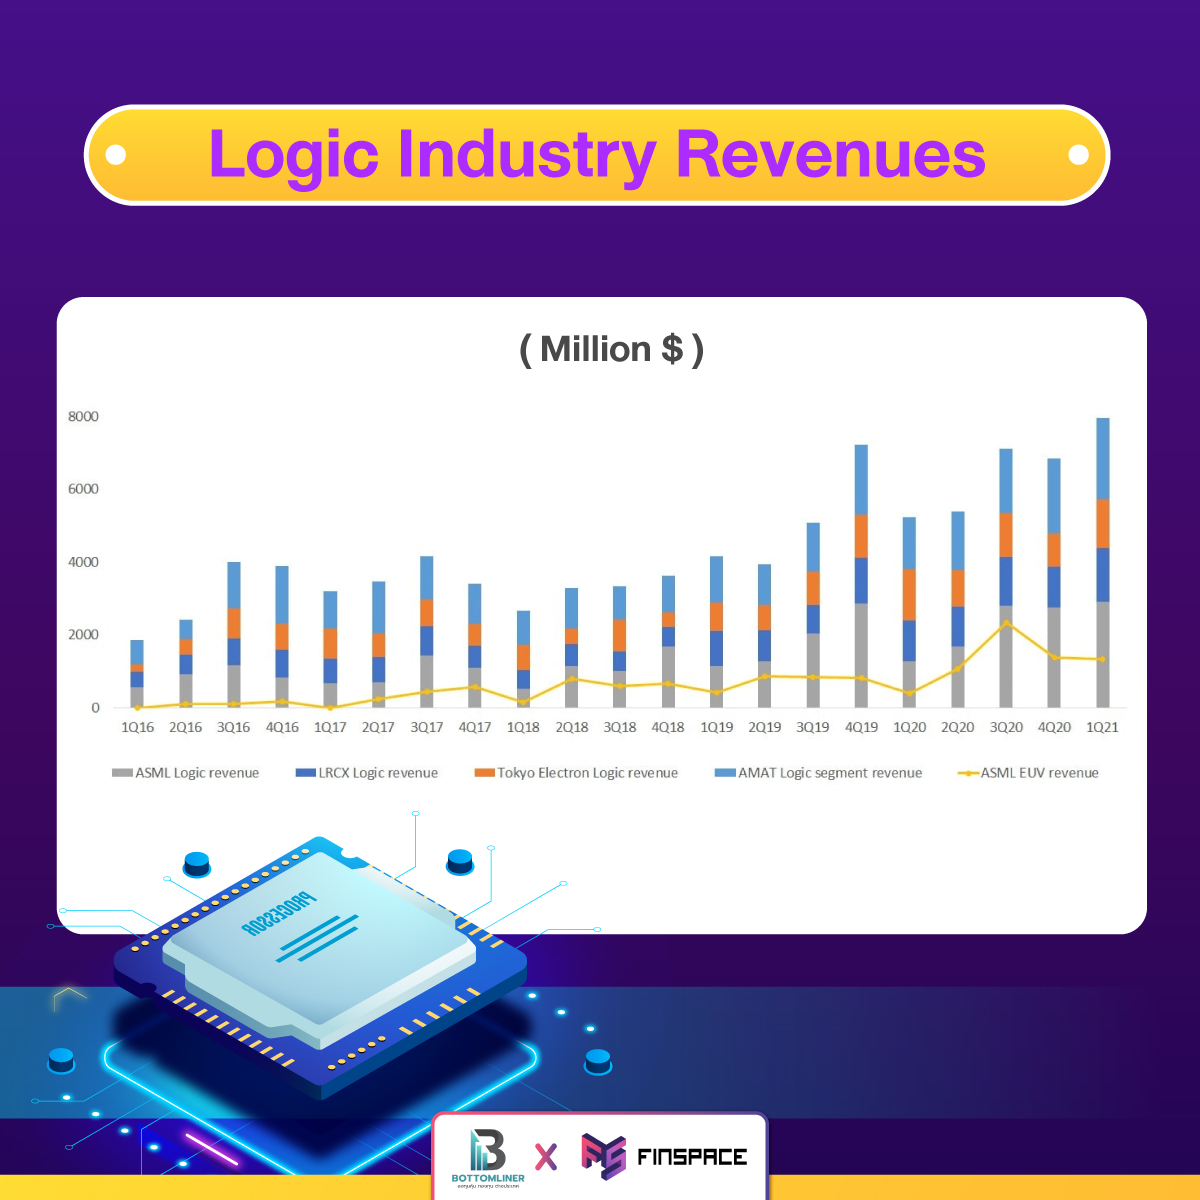 Logic Industry Revenues